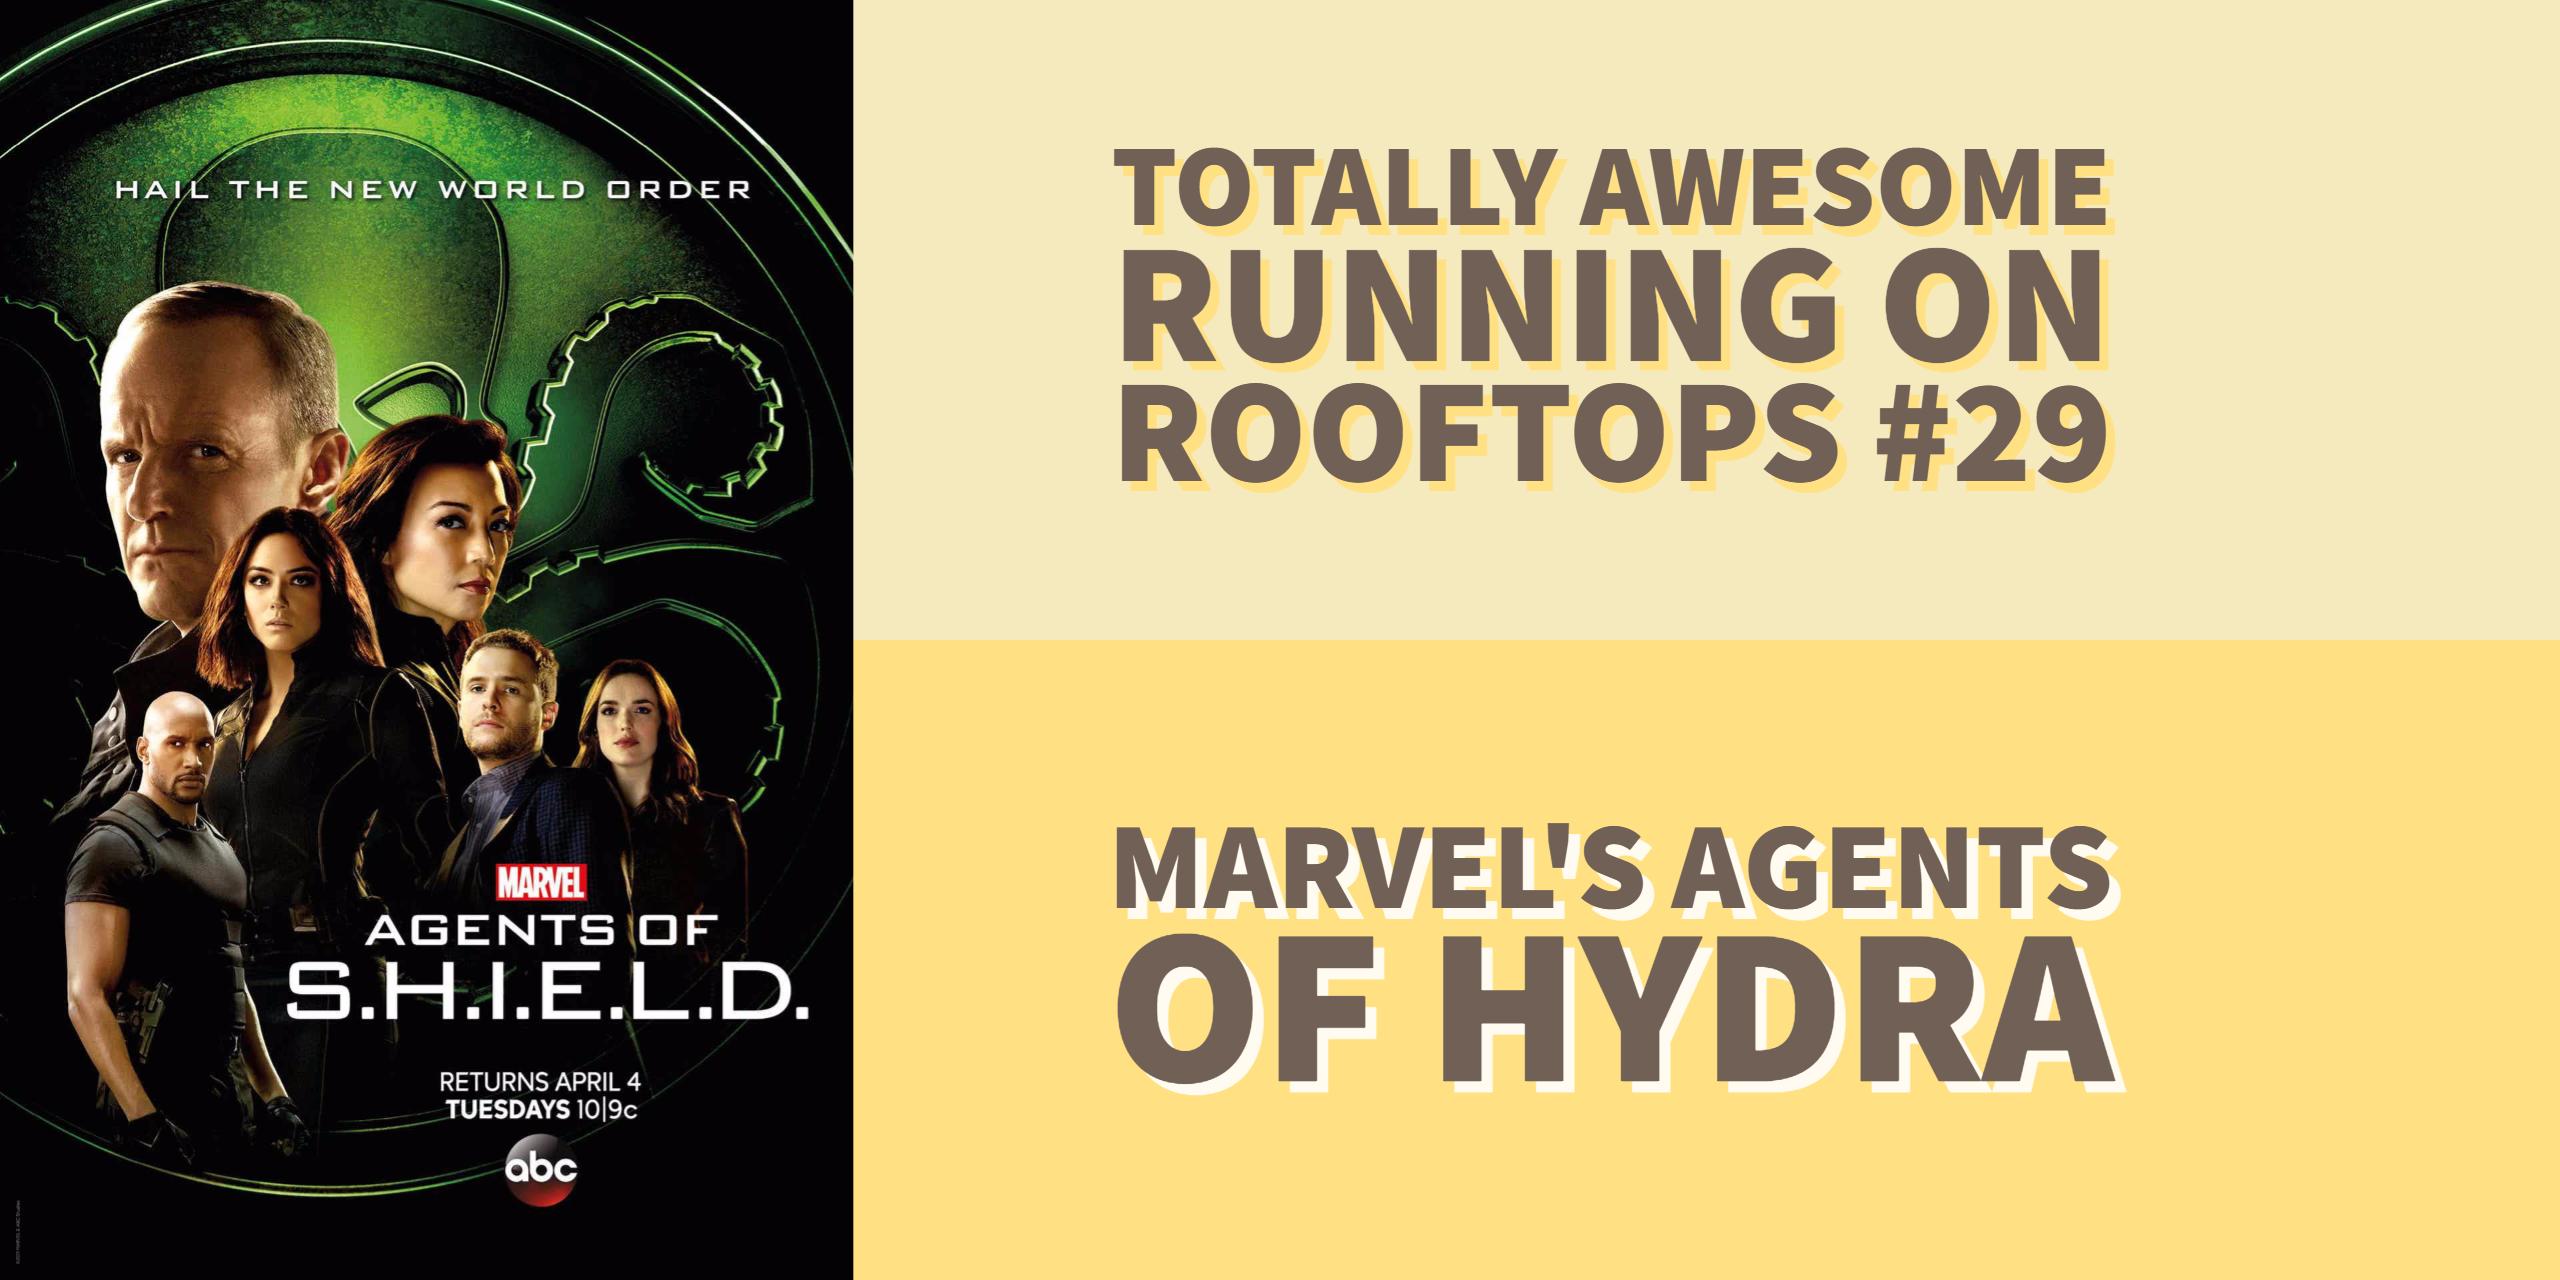 Marvel's Agent's of Hydra